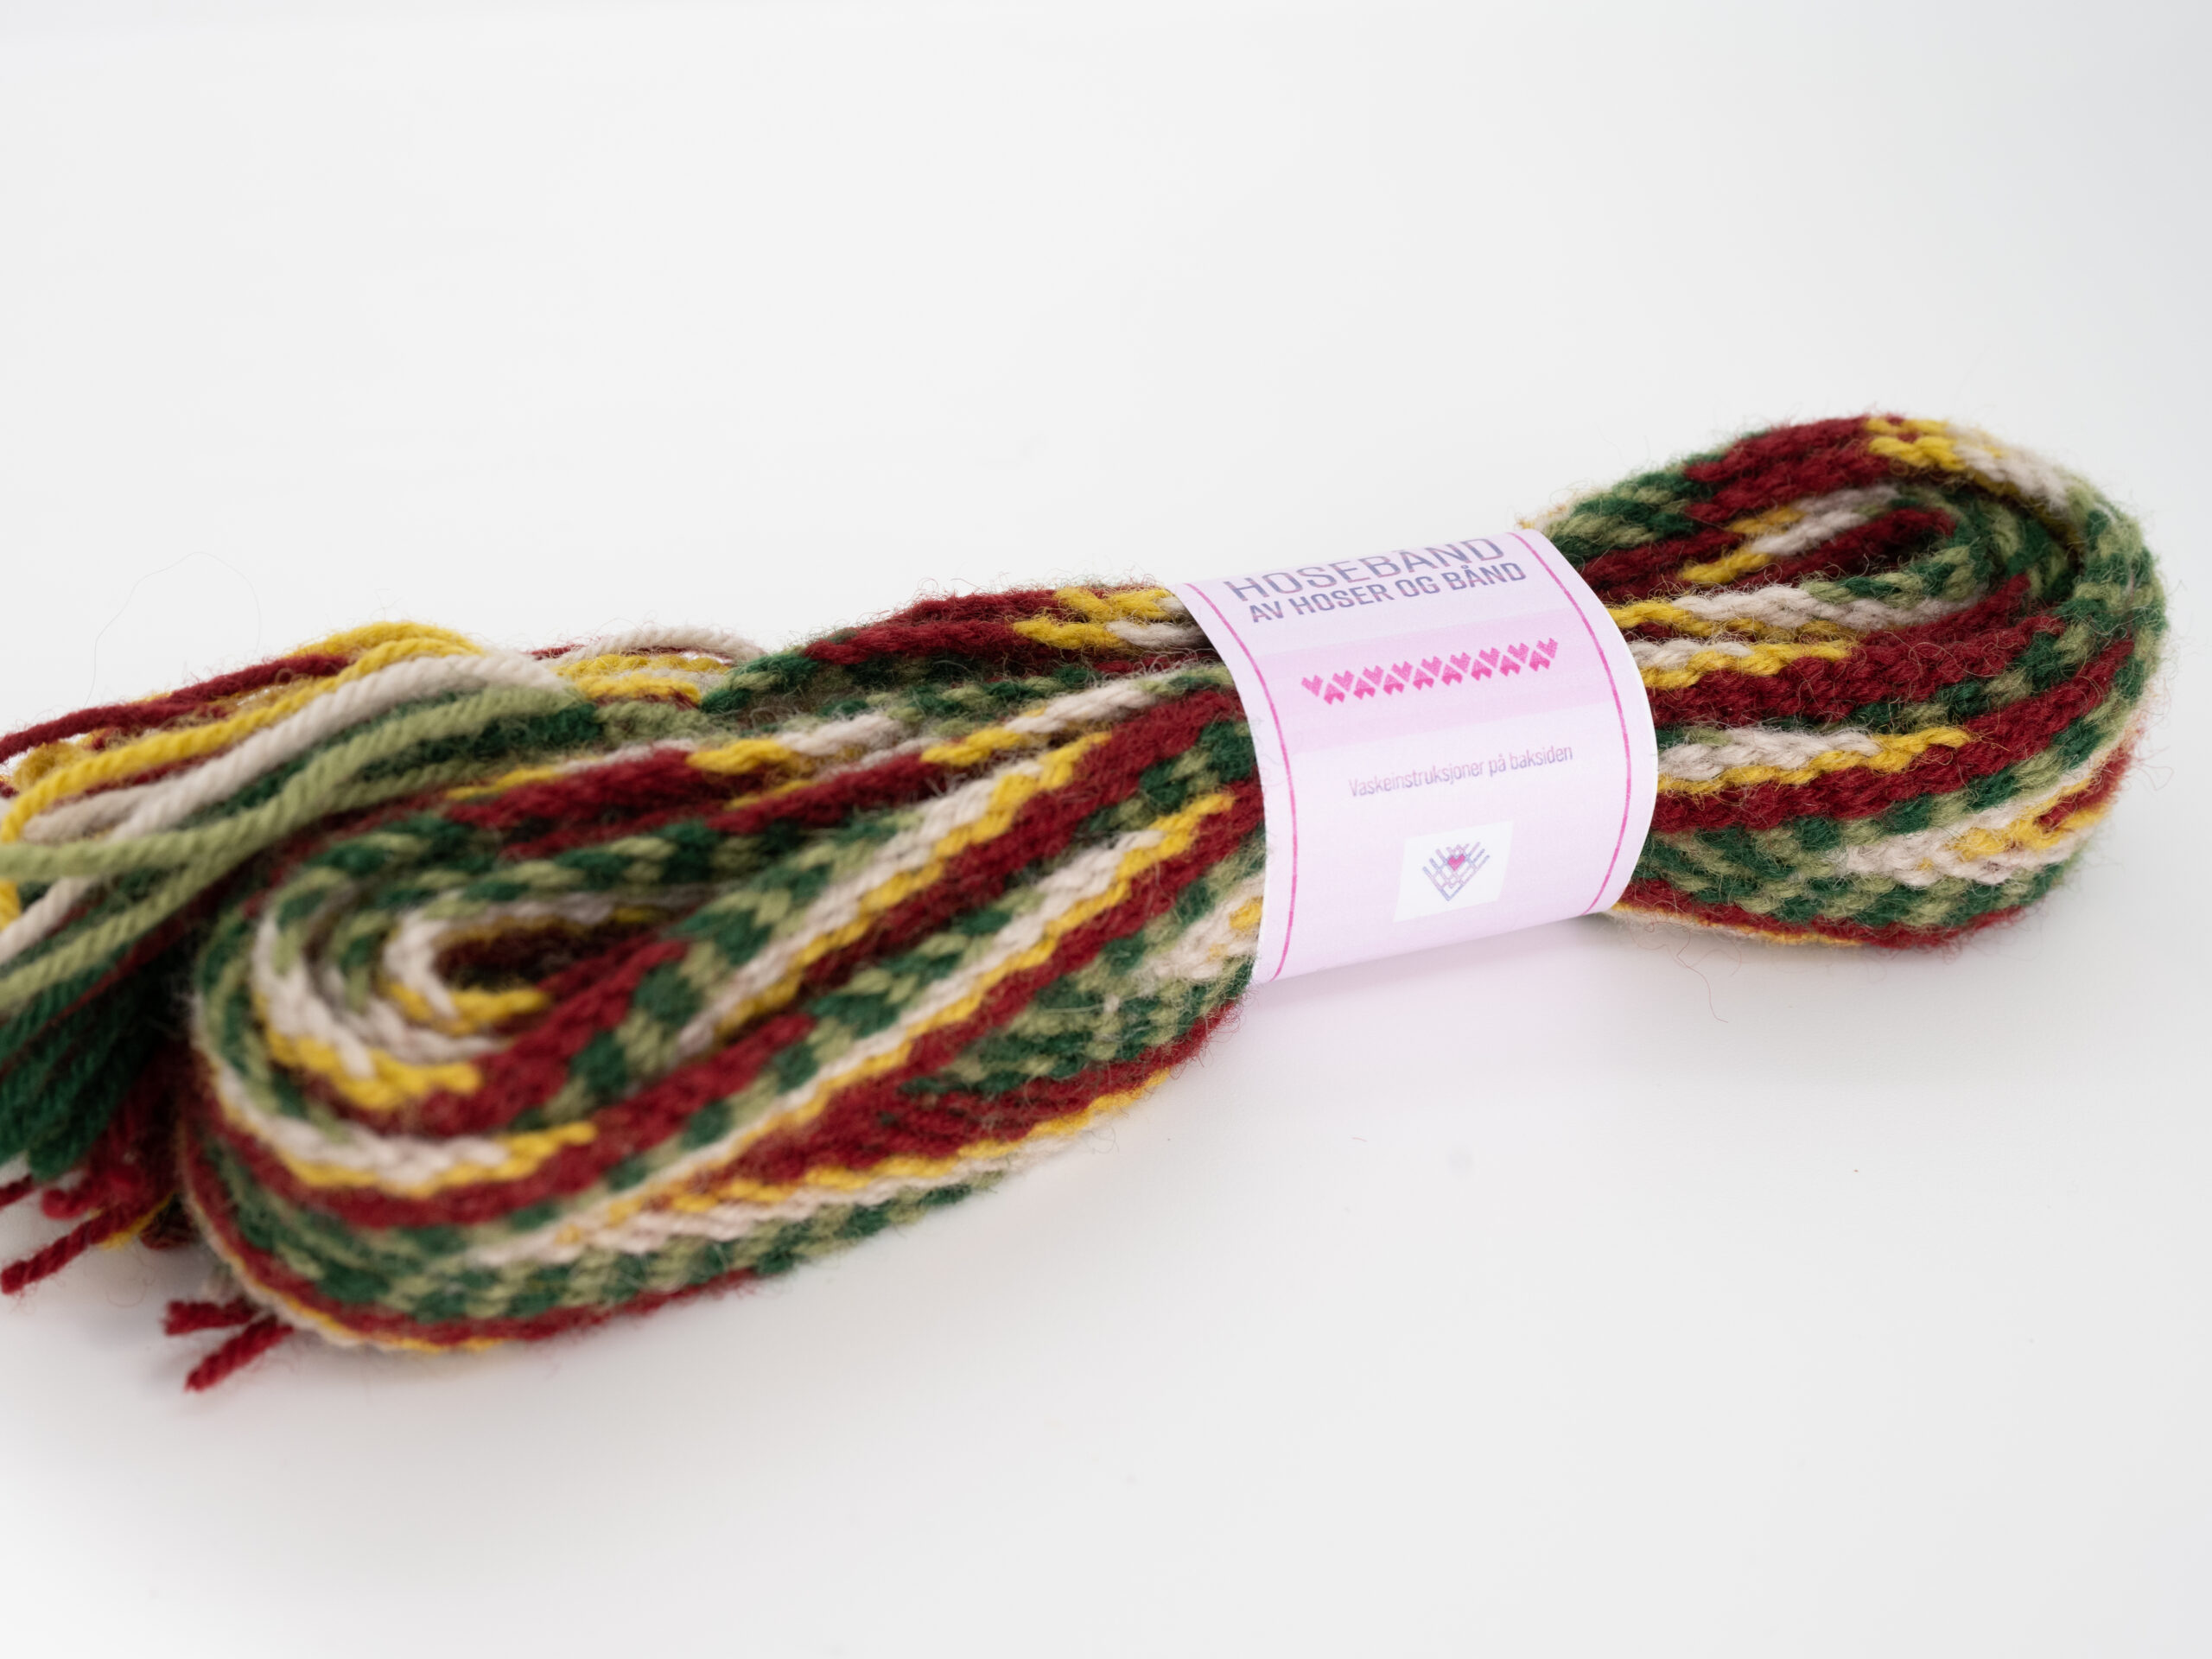 Sokkebånd til mannsbunad fra Gudbrandsdalen i farger som matcher vesten